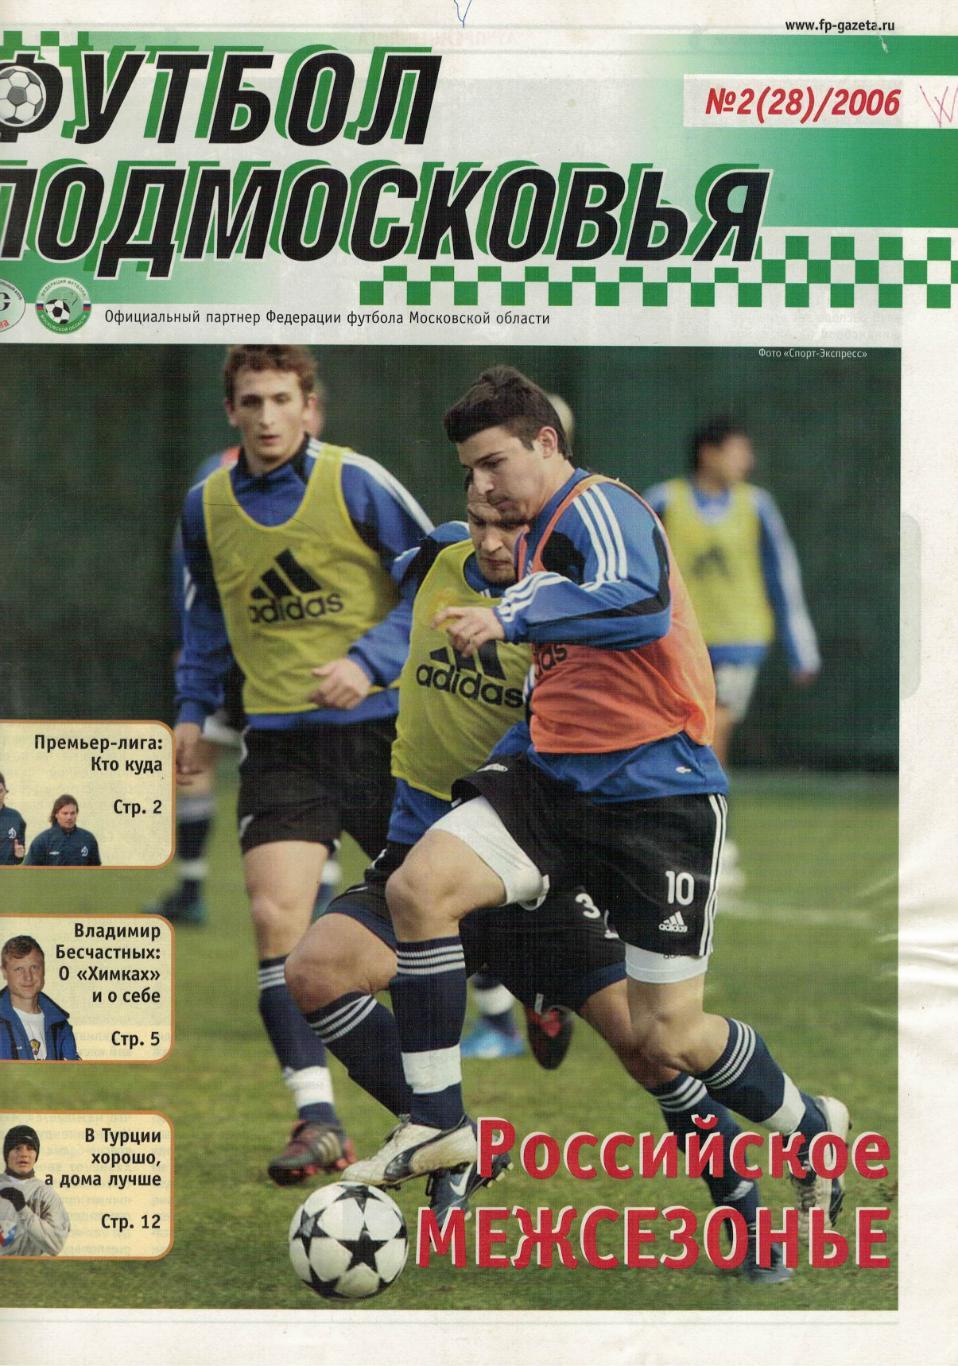 газета Футбол Подмосковье № 2 (28) / 2006